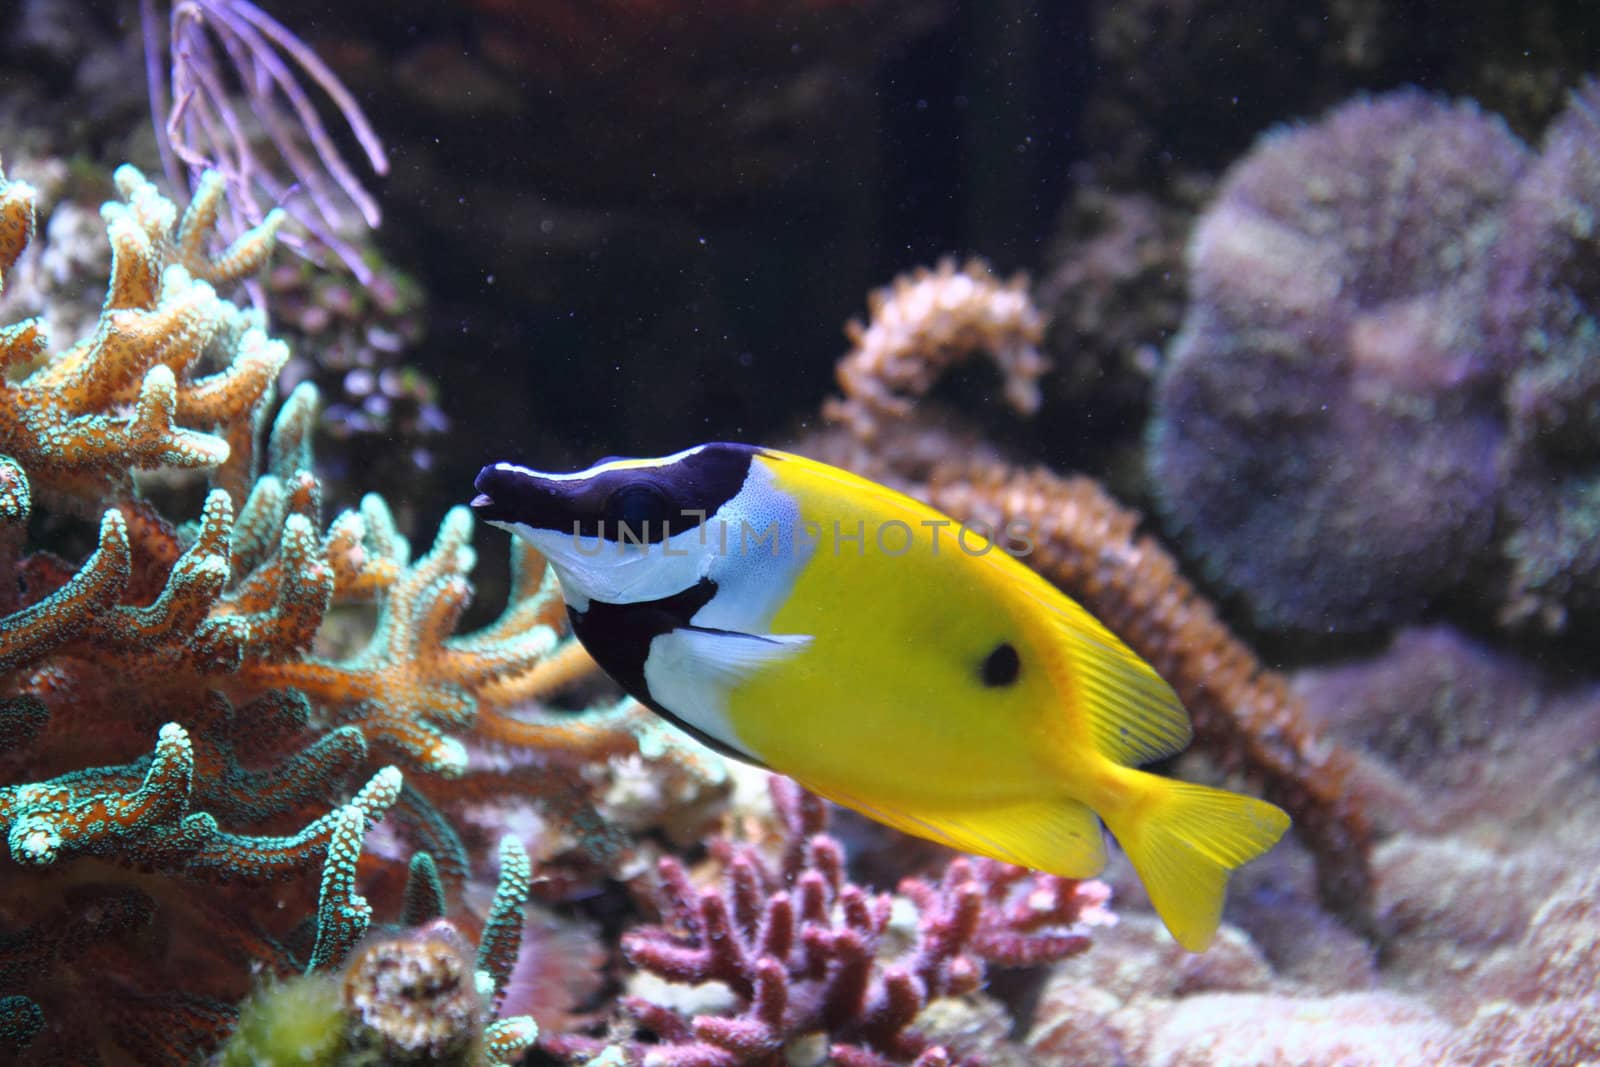 nice aquarium background with the yellow fish